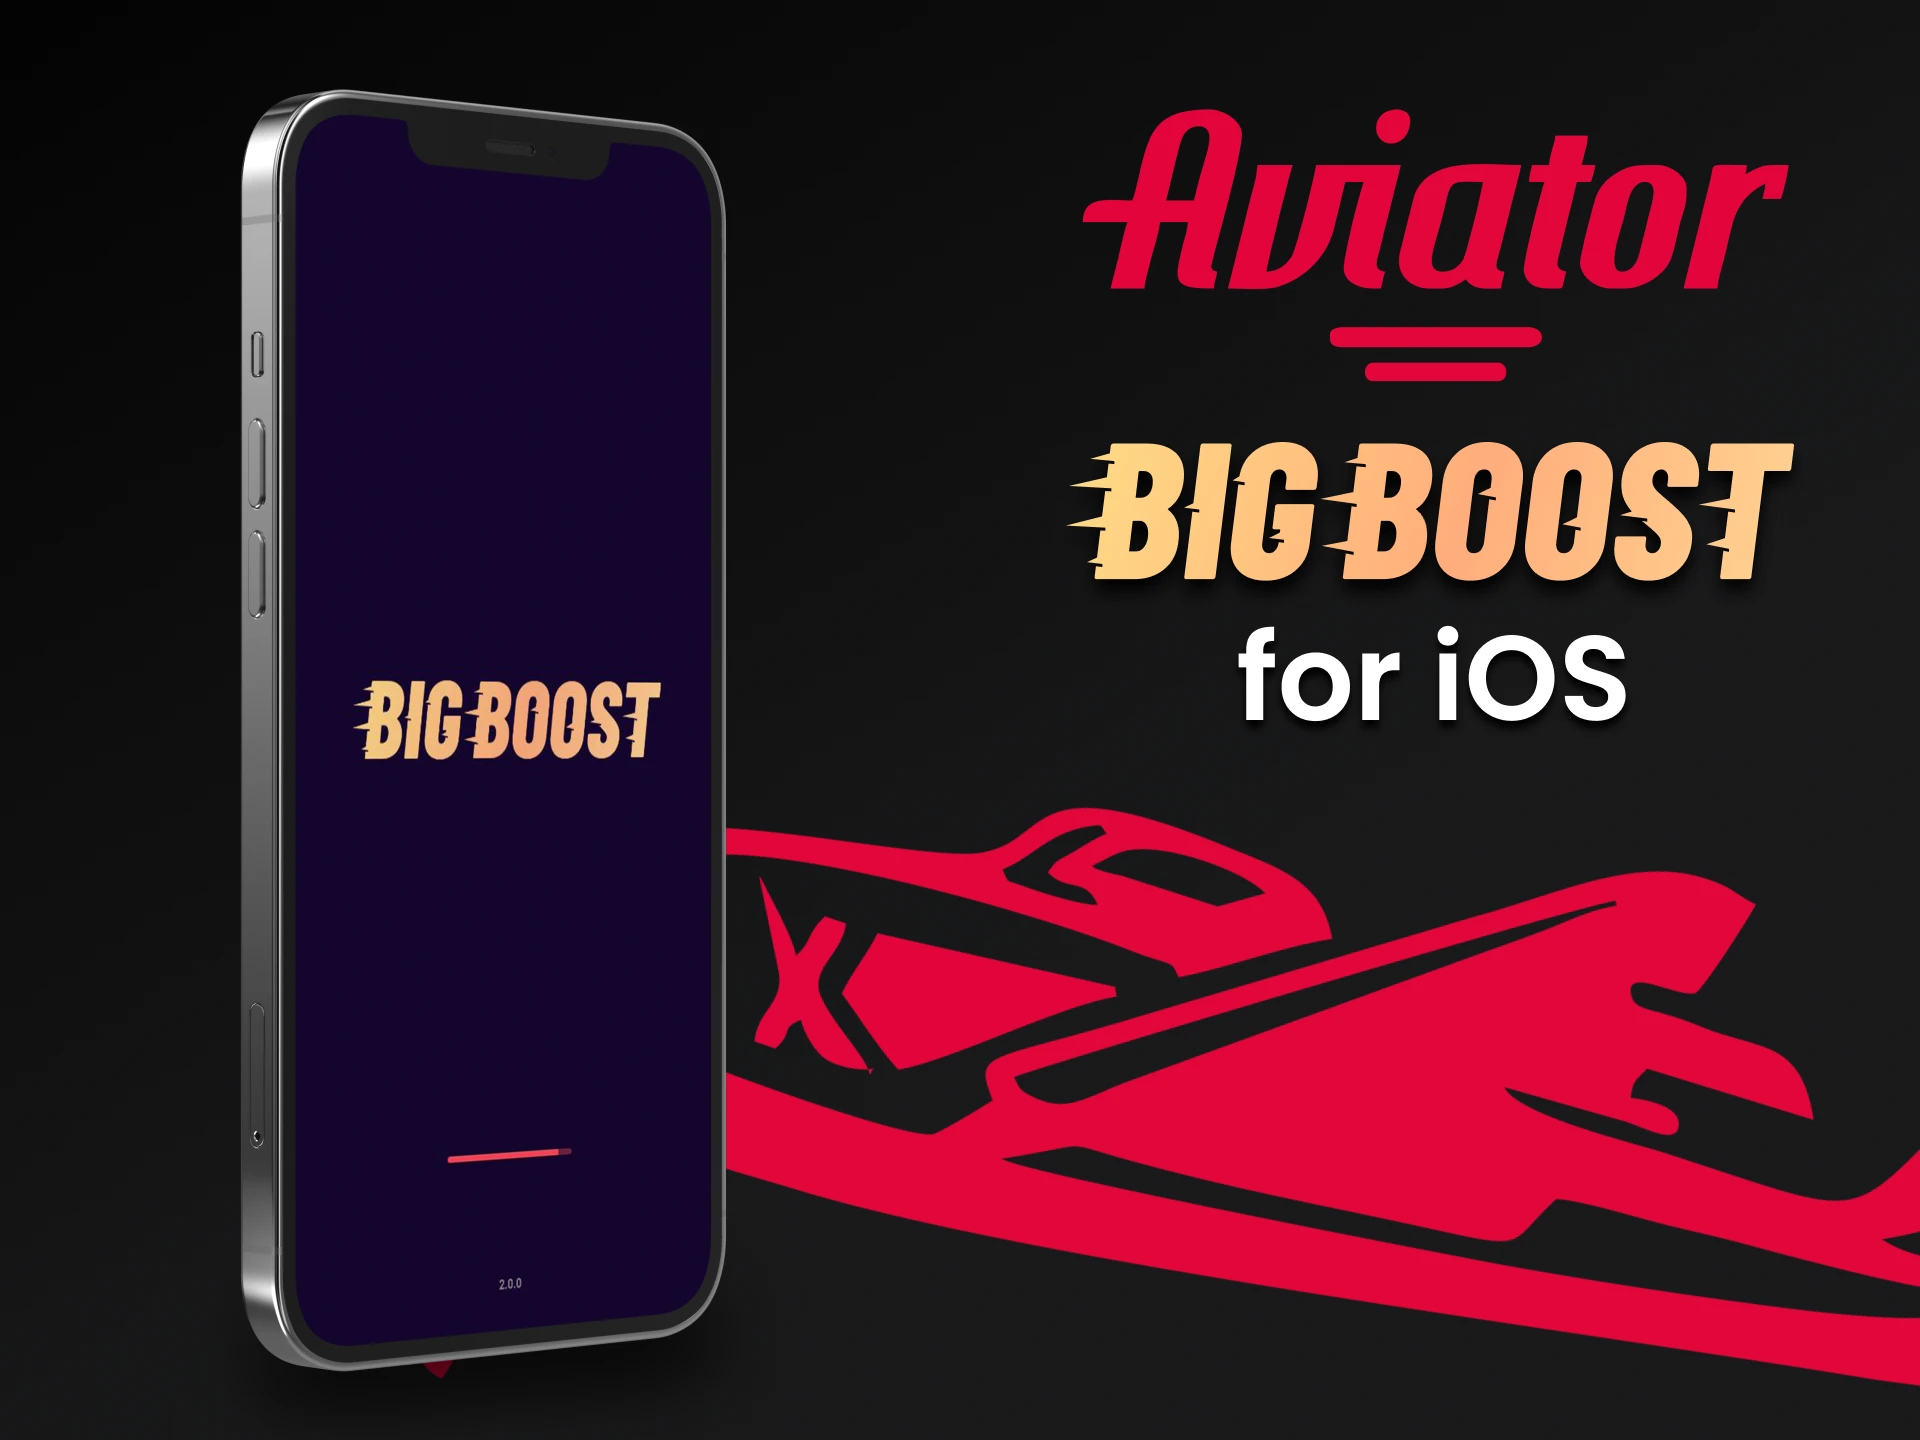 Play Aviator on the Big Boost iOS app.